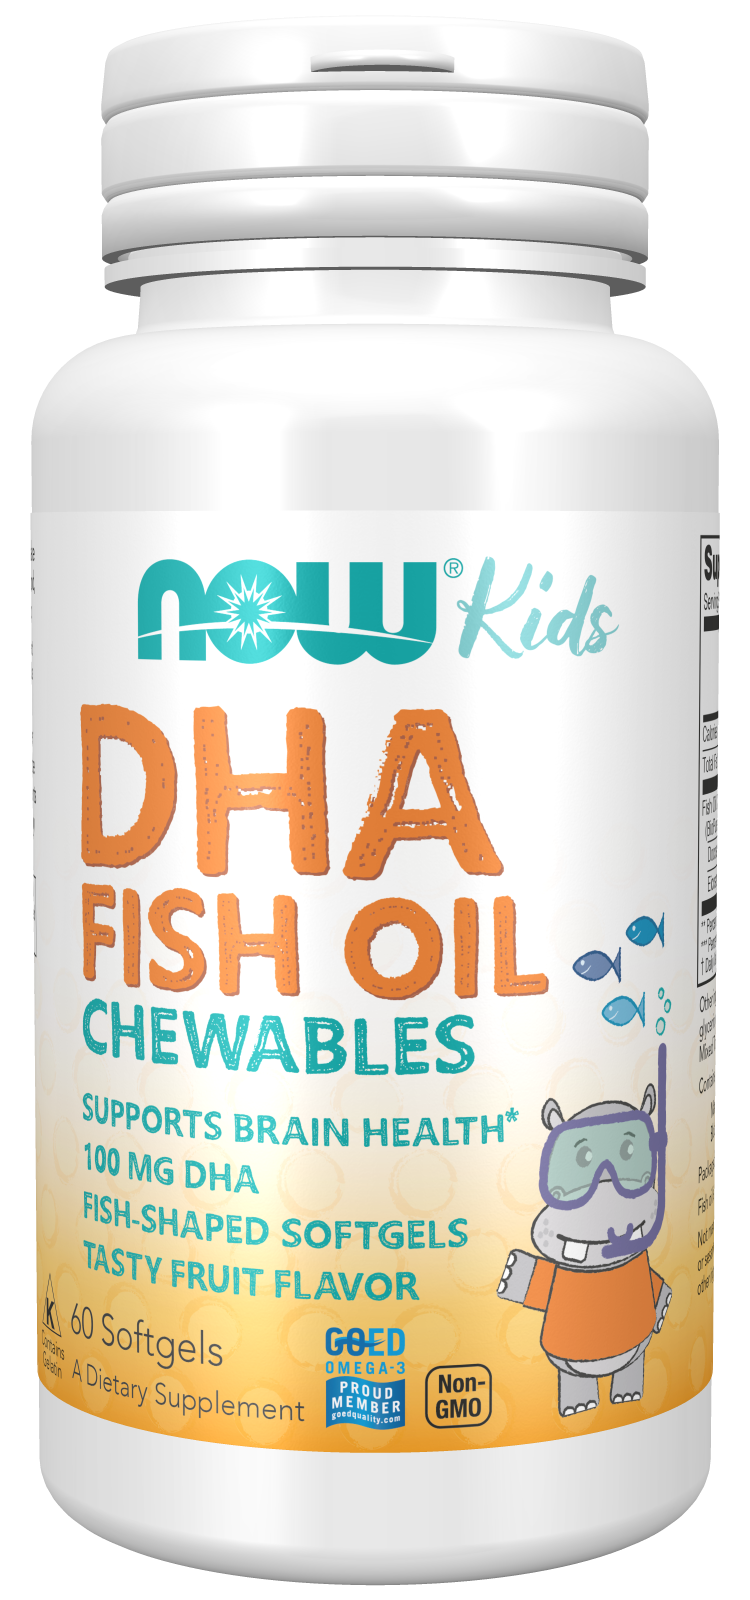 DHA Kids Fish Oil Chewable Softgels